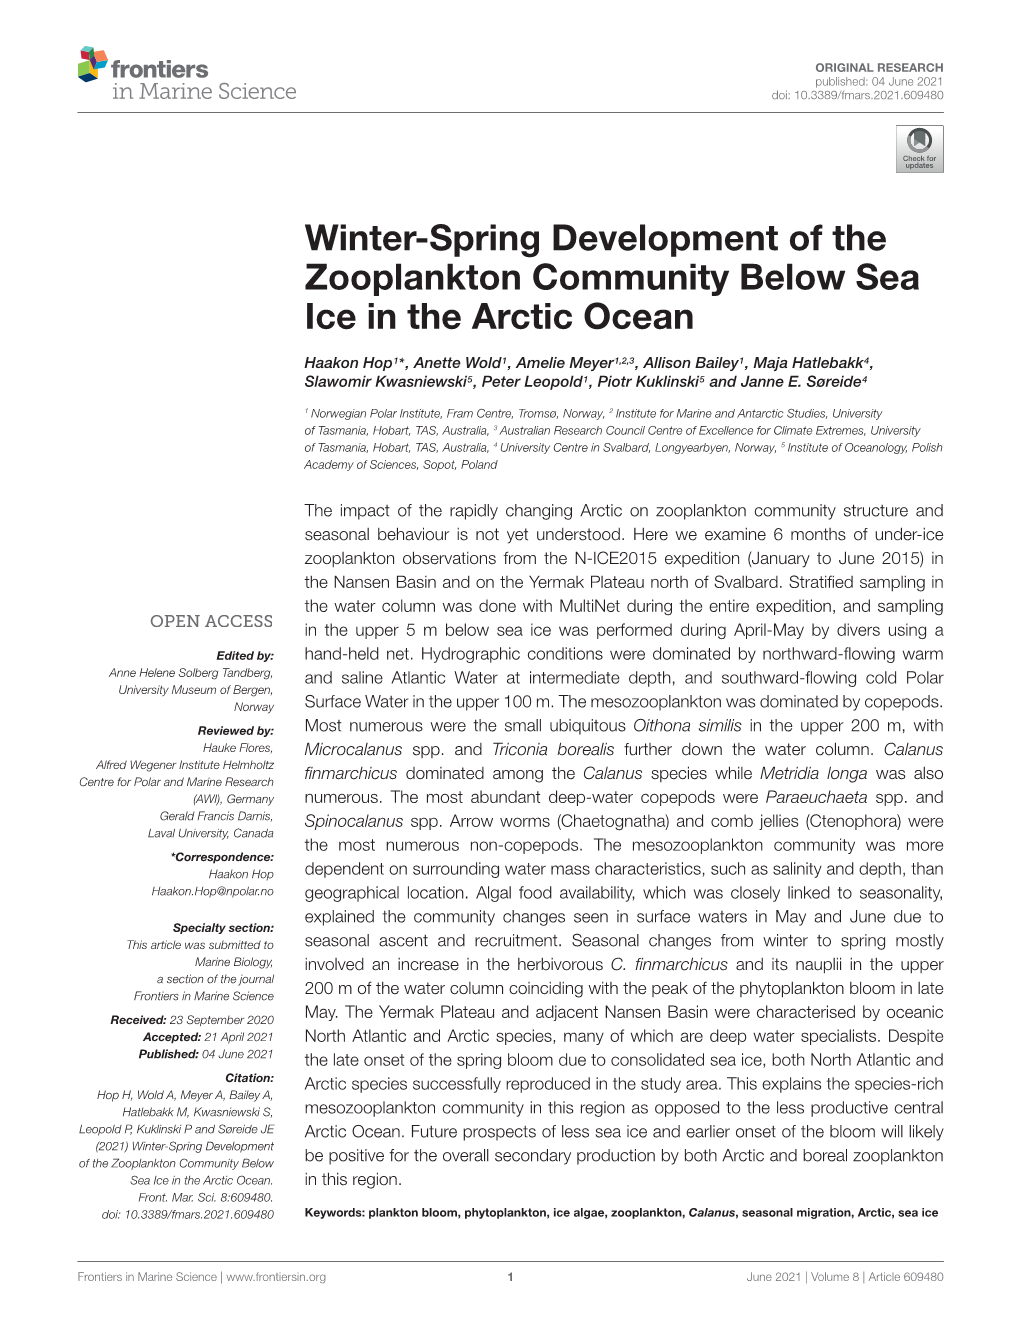 Winter-Spring Development of the Zooplankton Community Below Sea Ice in the Arctic Ocean